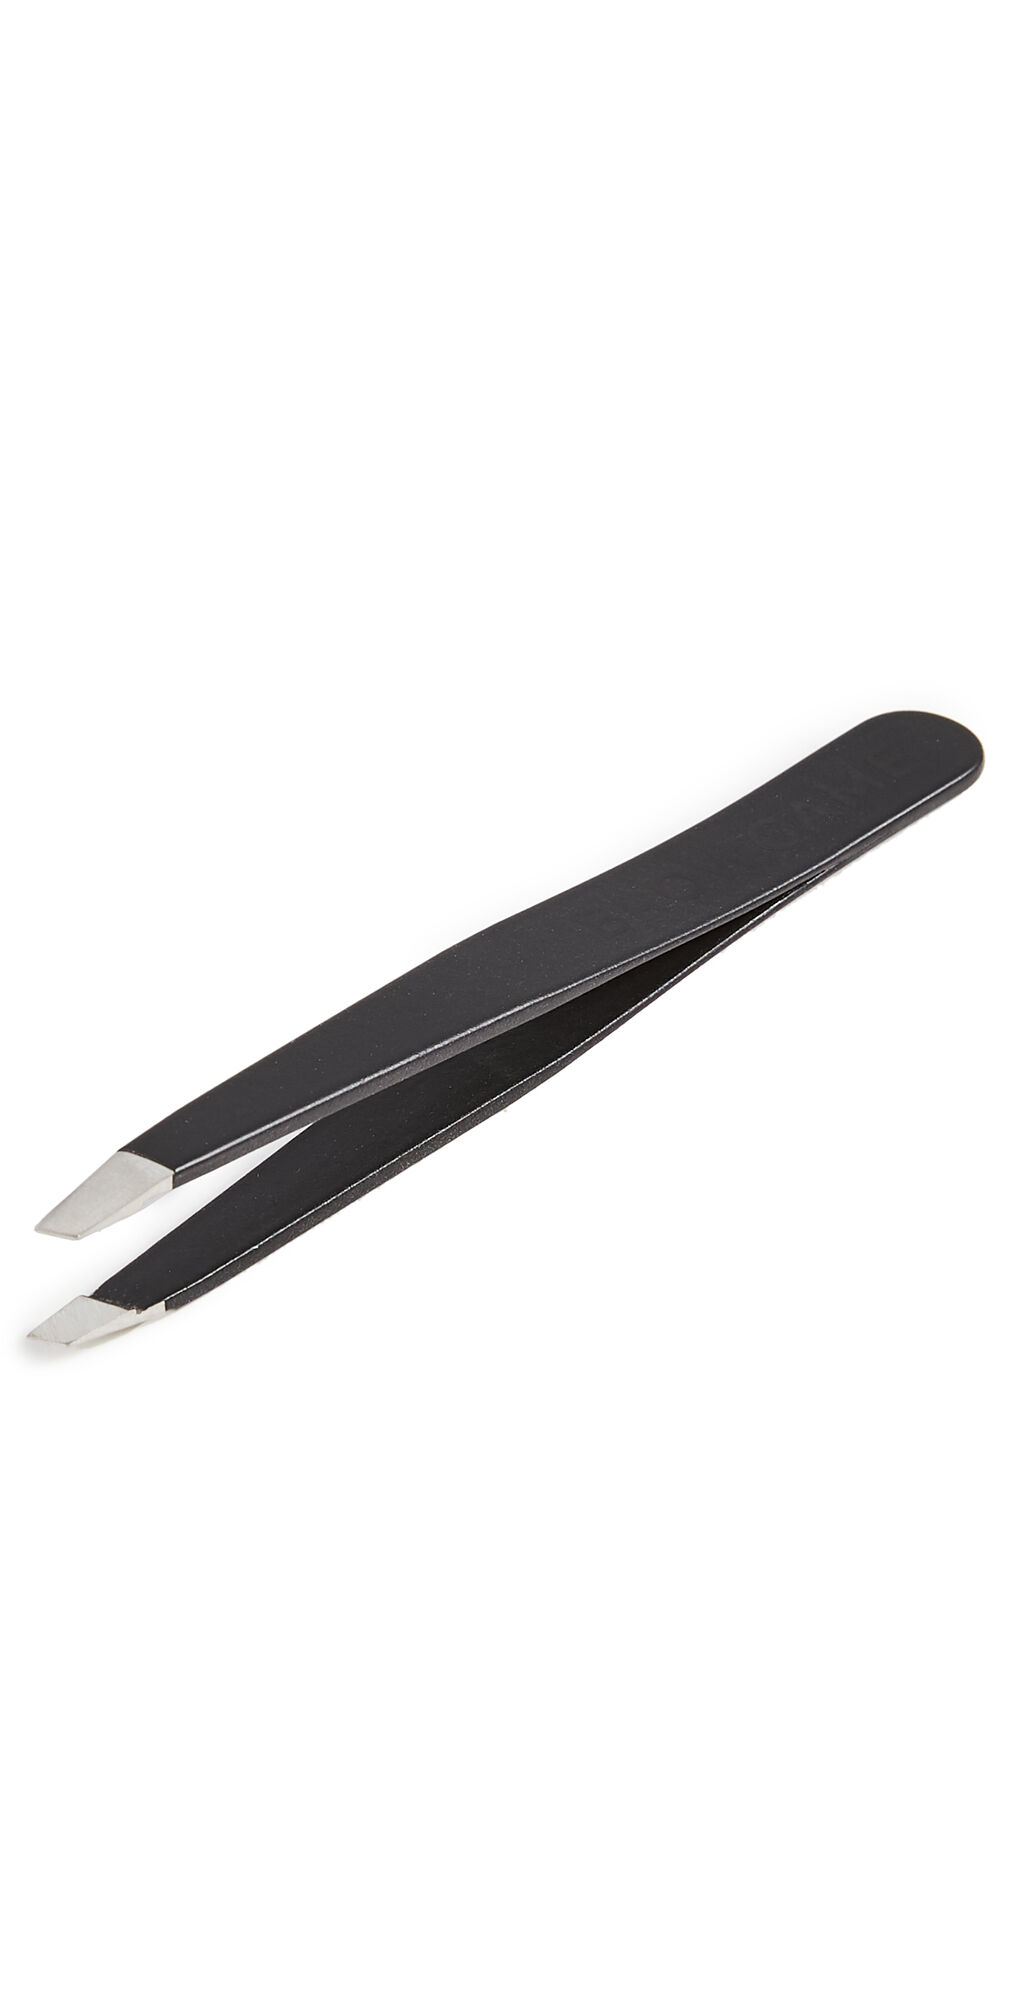 Shopbop Home Shopbop @Home Signature Slanted Soft Touch Tweezer Black One Size    size: